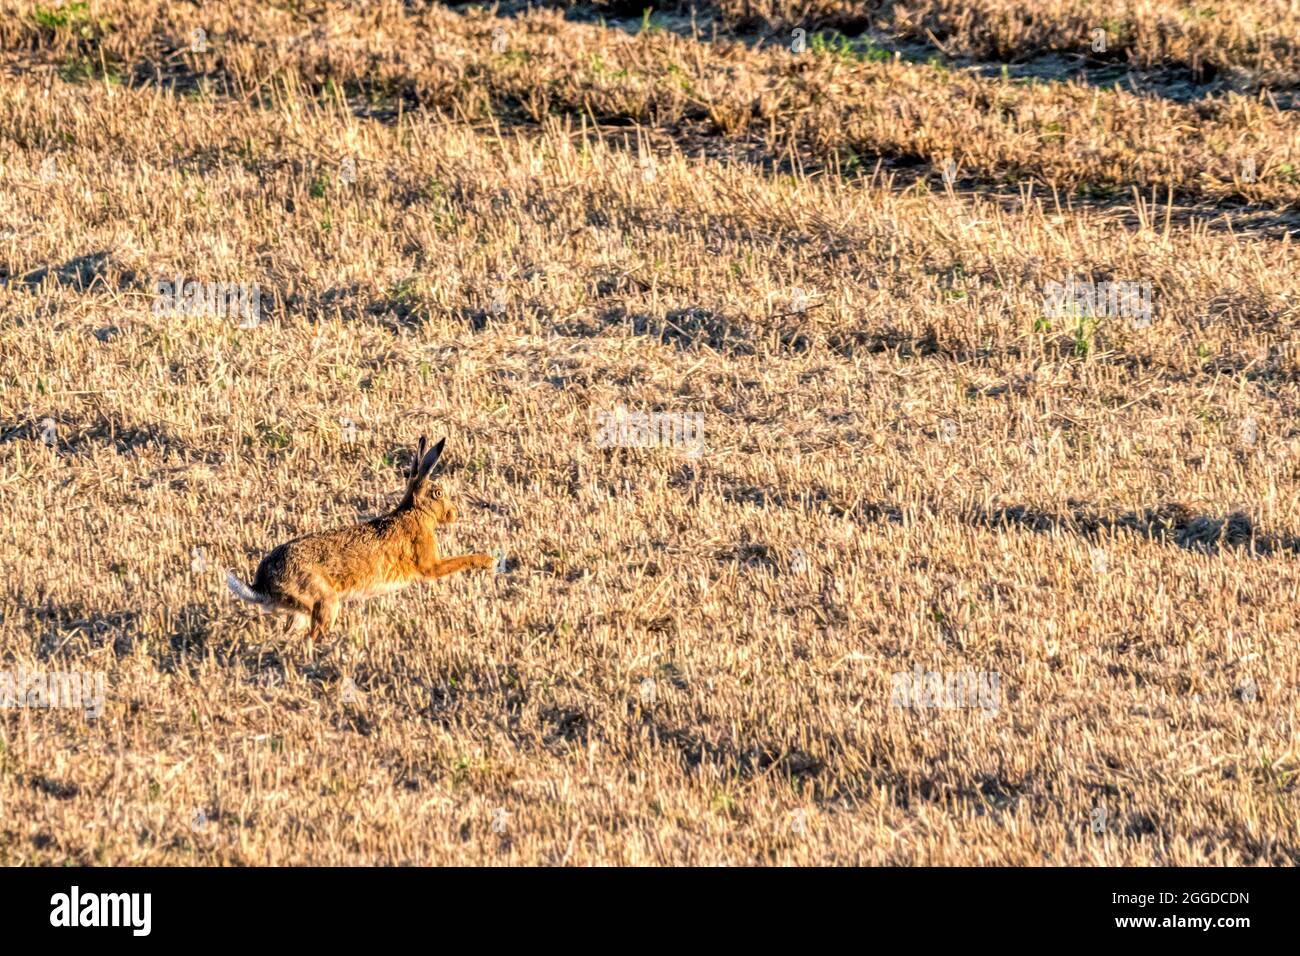 European hare, Lepus europaeus, running across a field of stubble immediately after harvest. Stock Photo